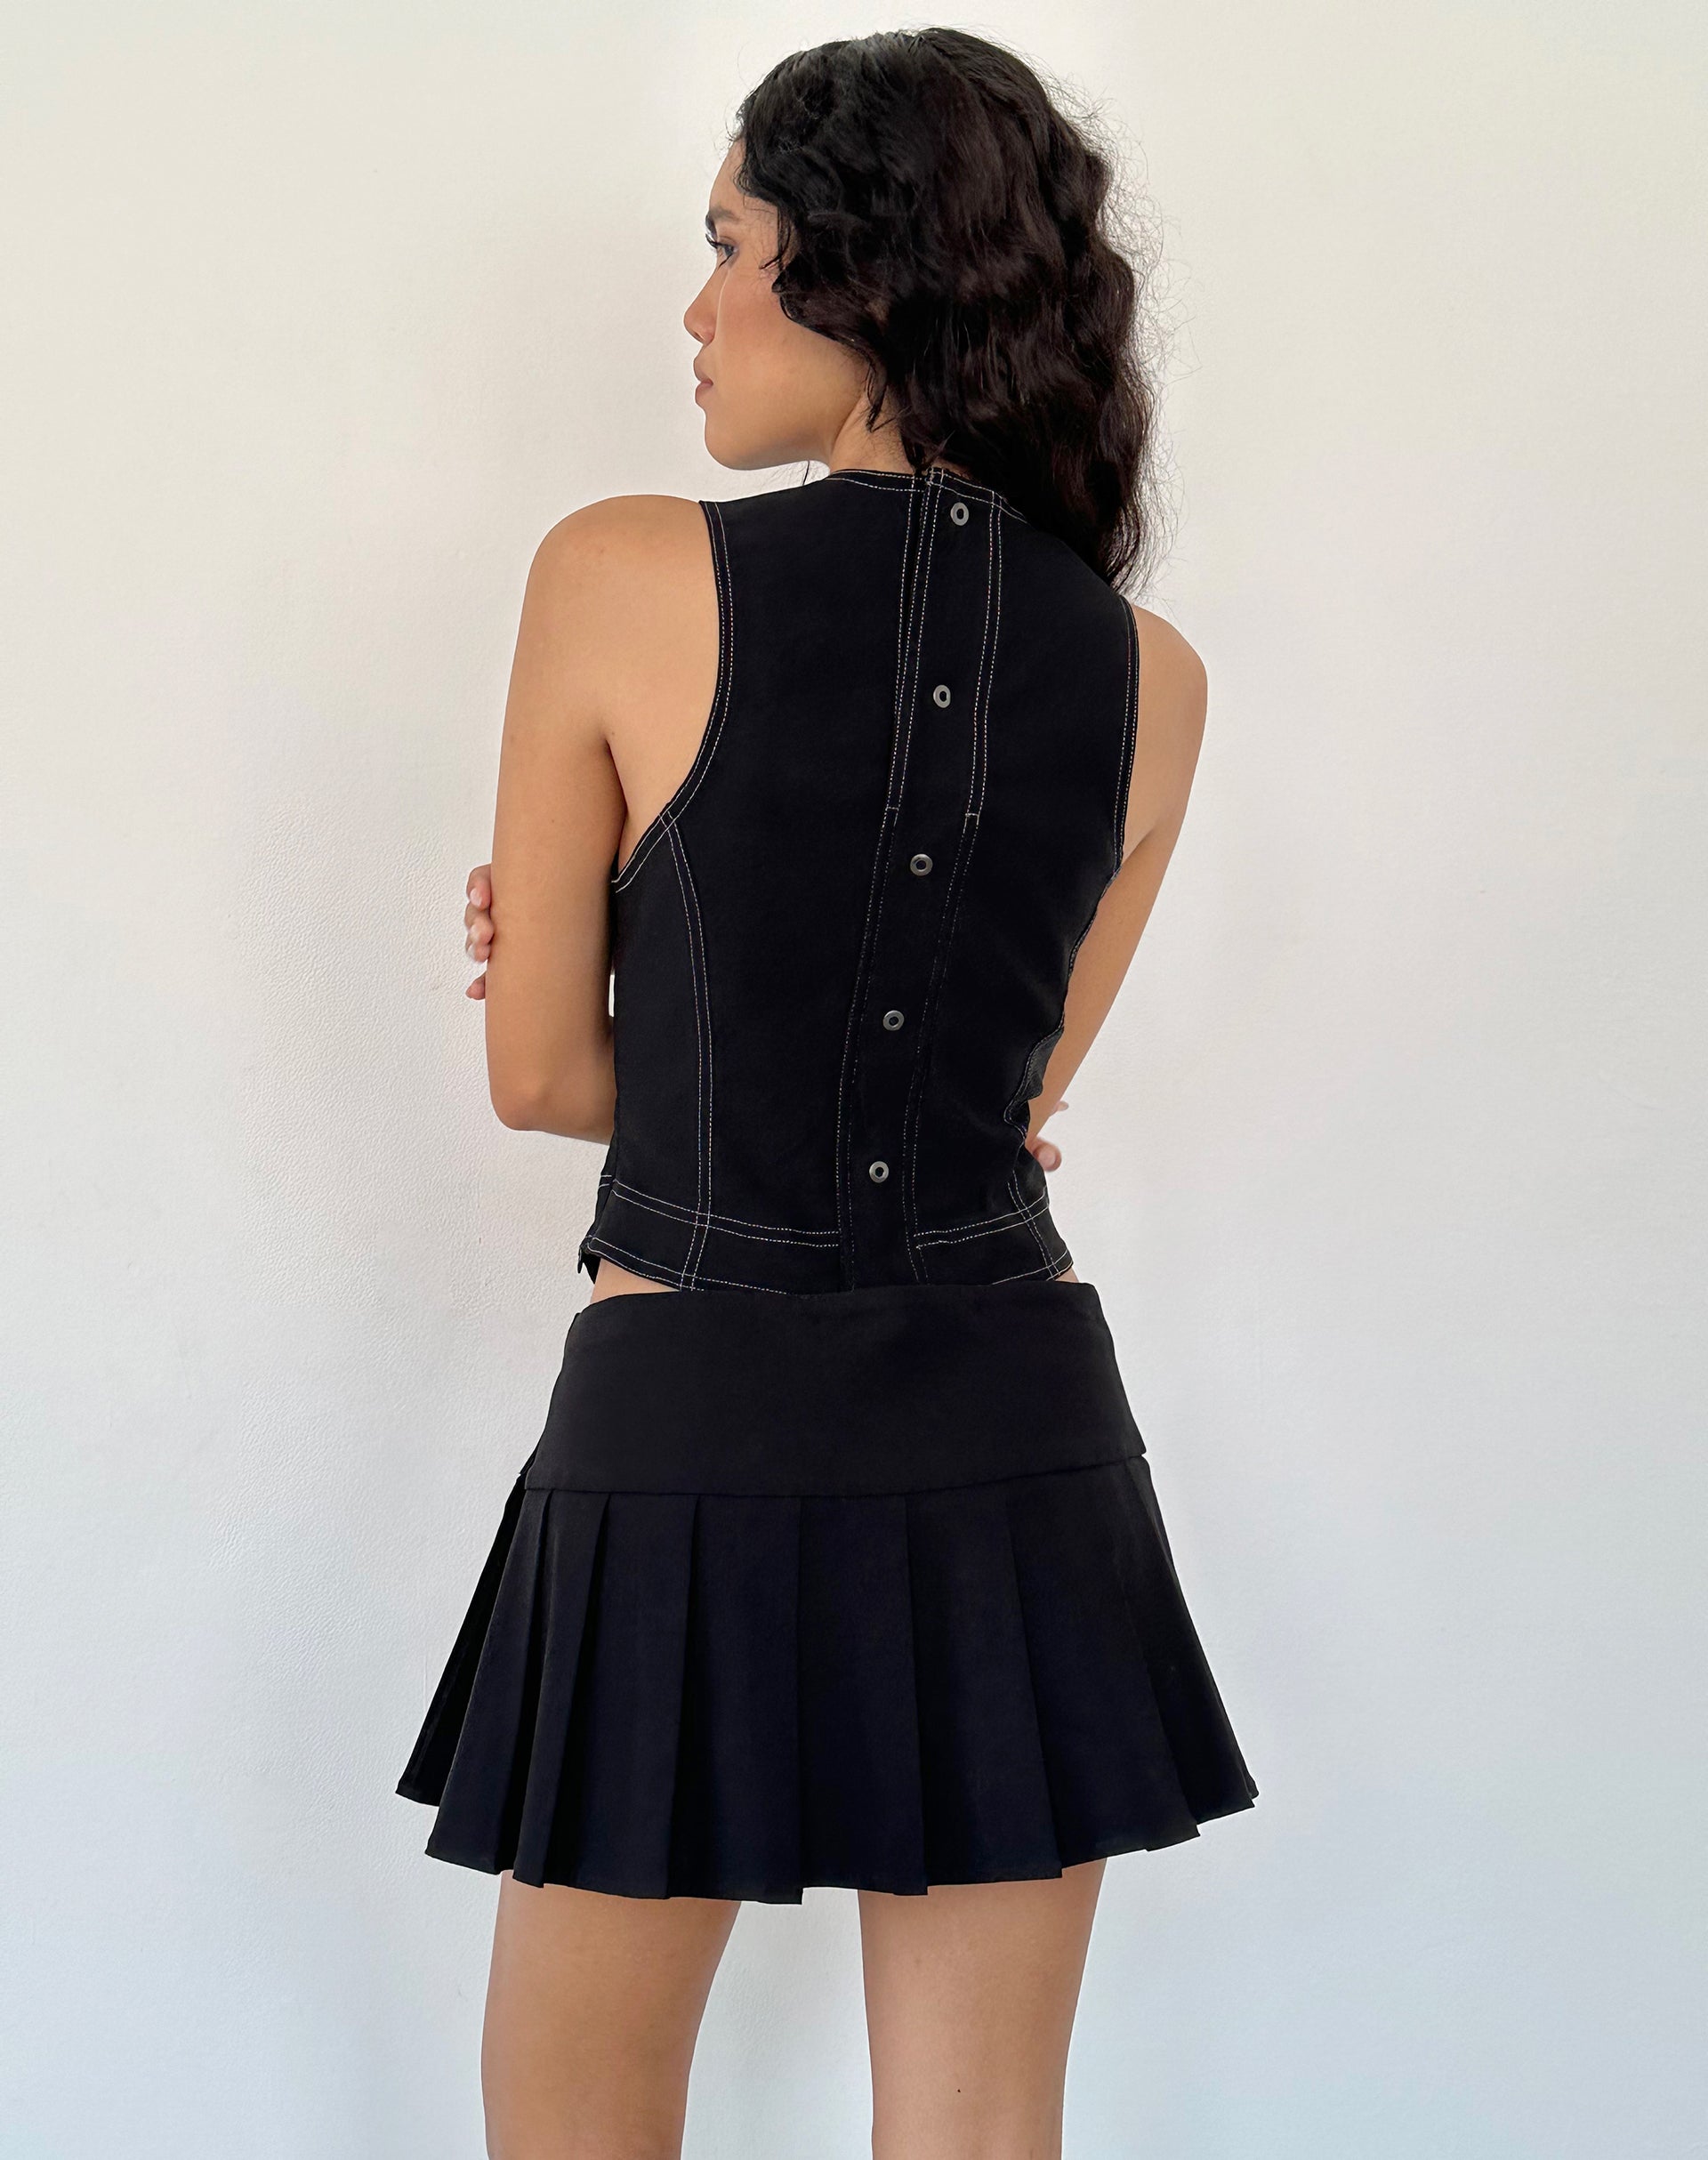 Verbena Lace Panel Top in Black Tailoring